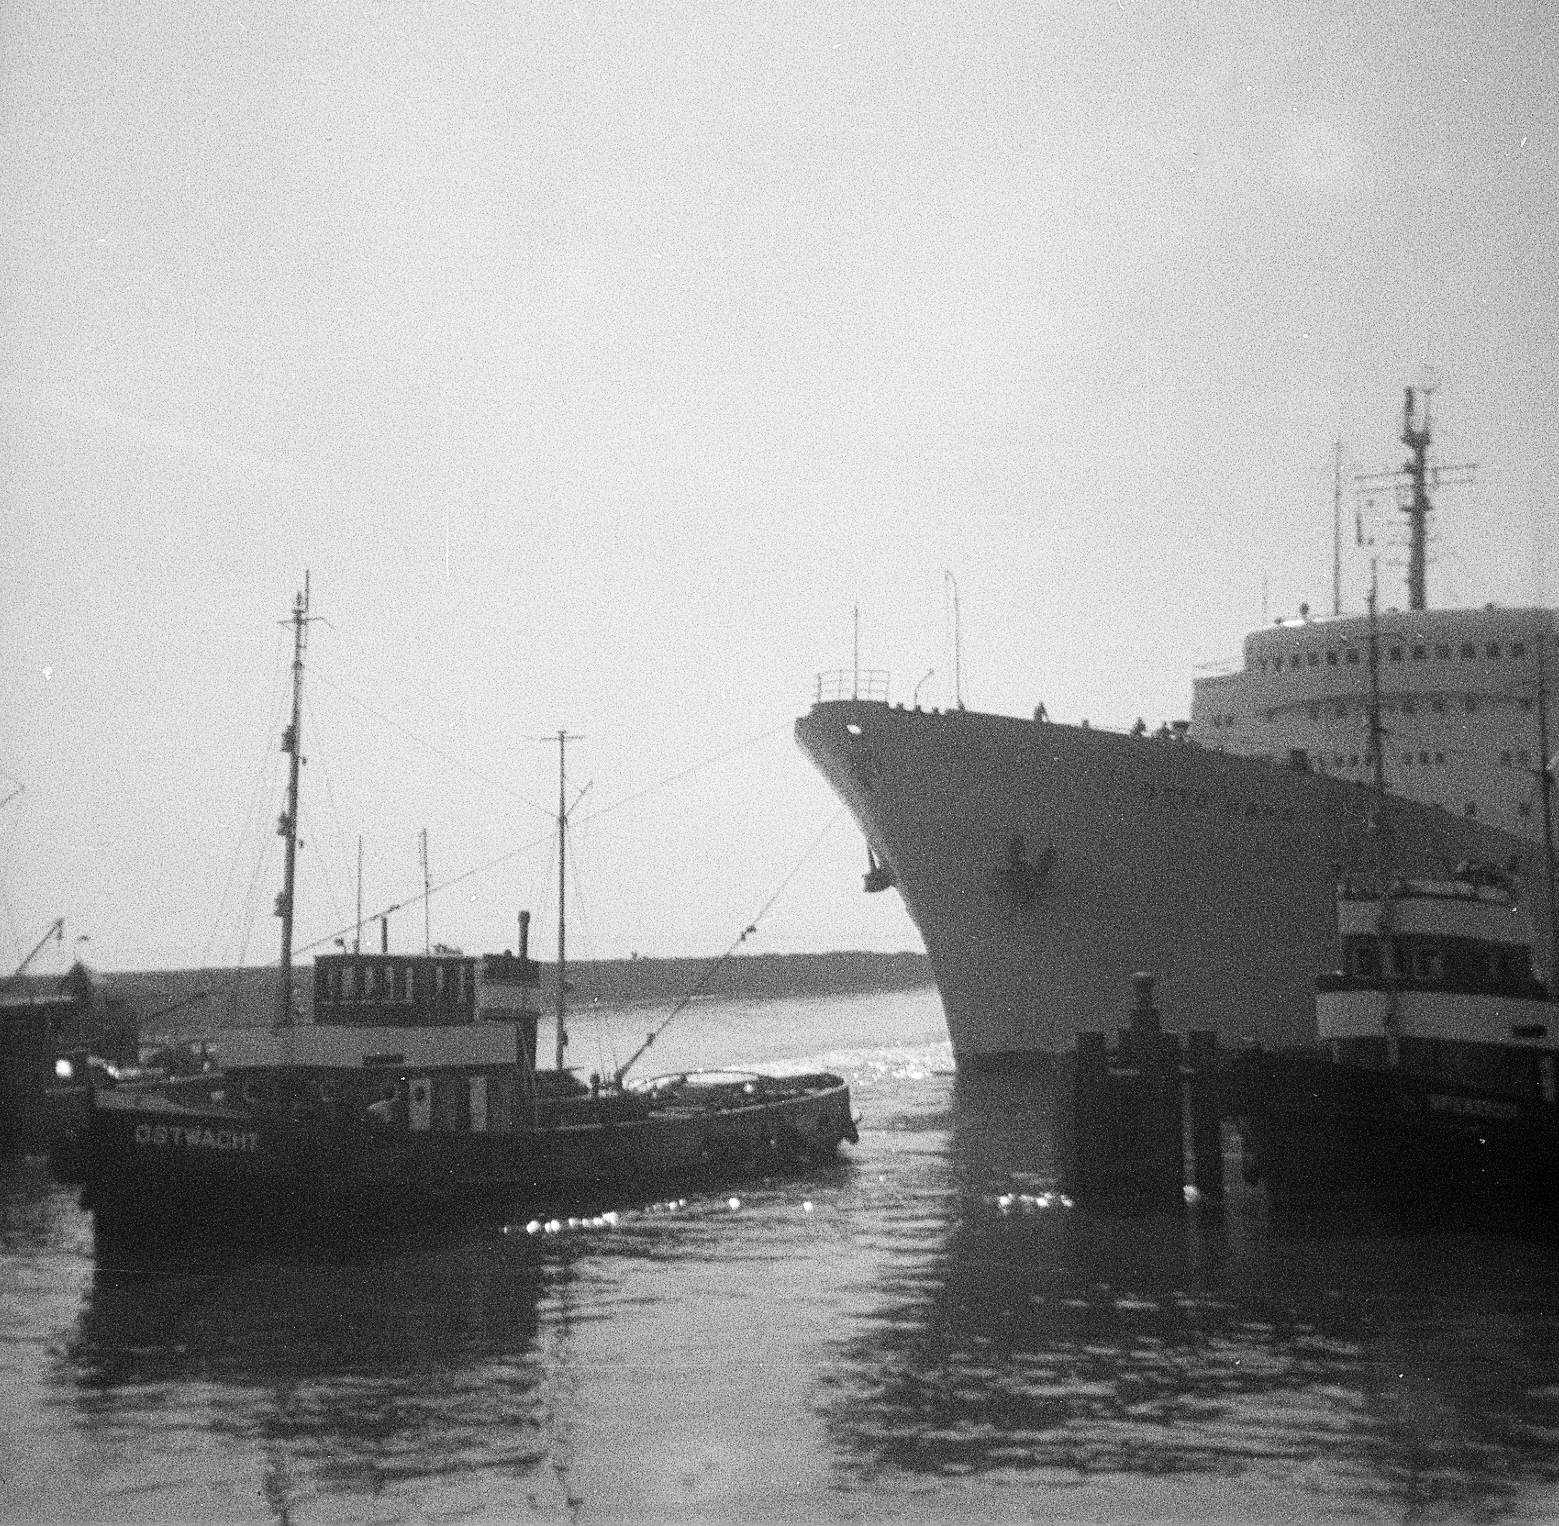 The ships OTTO HAHN and OSTWACHT and SPIEKEROOG in port Emden. Black & White photo: Erwin Thomasius.